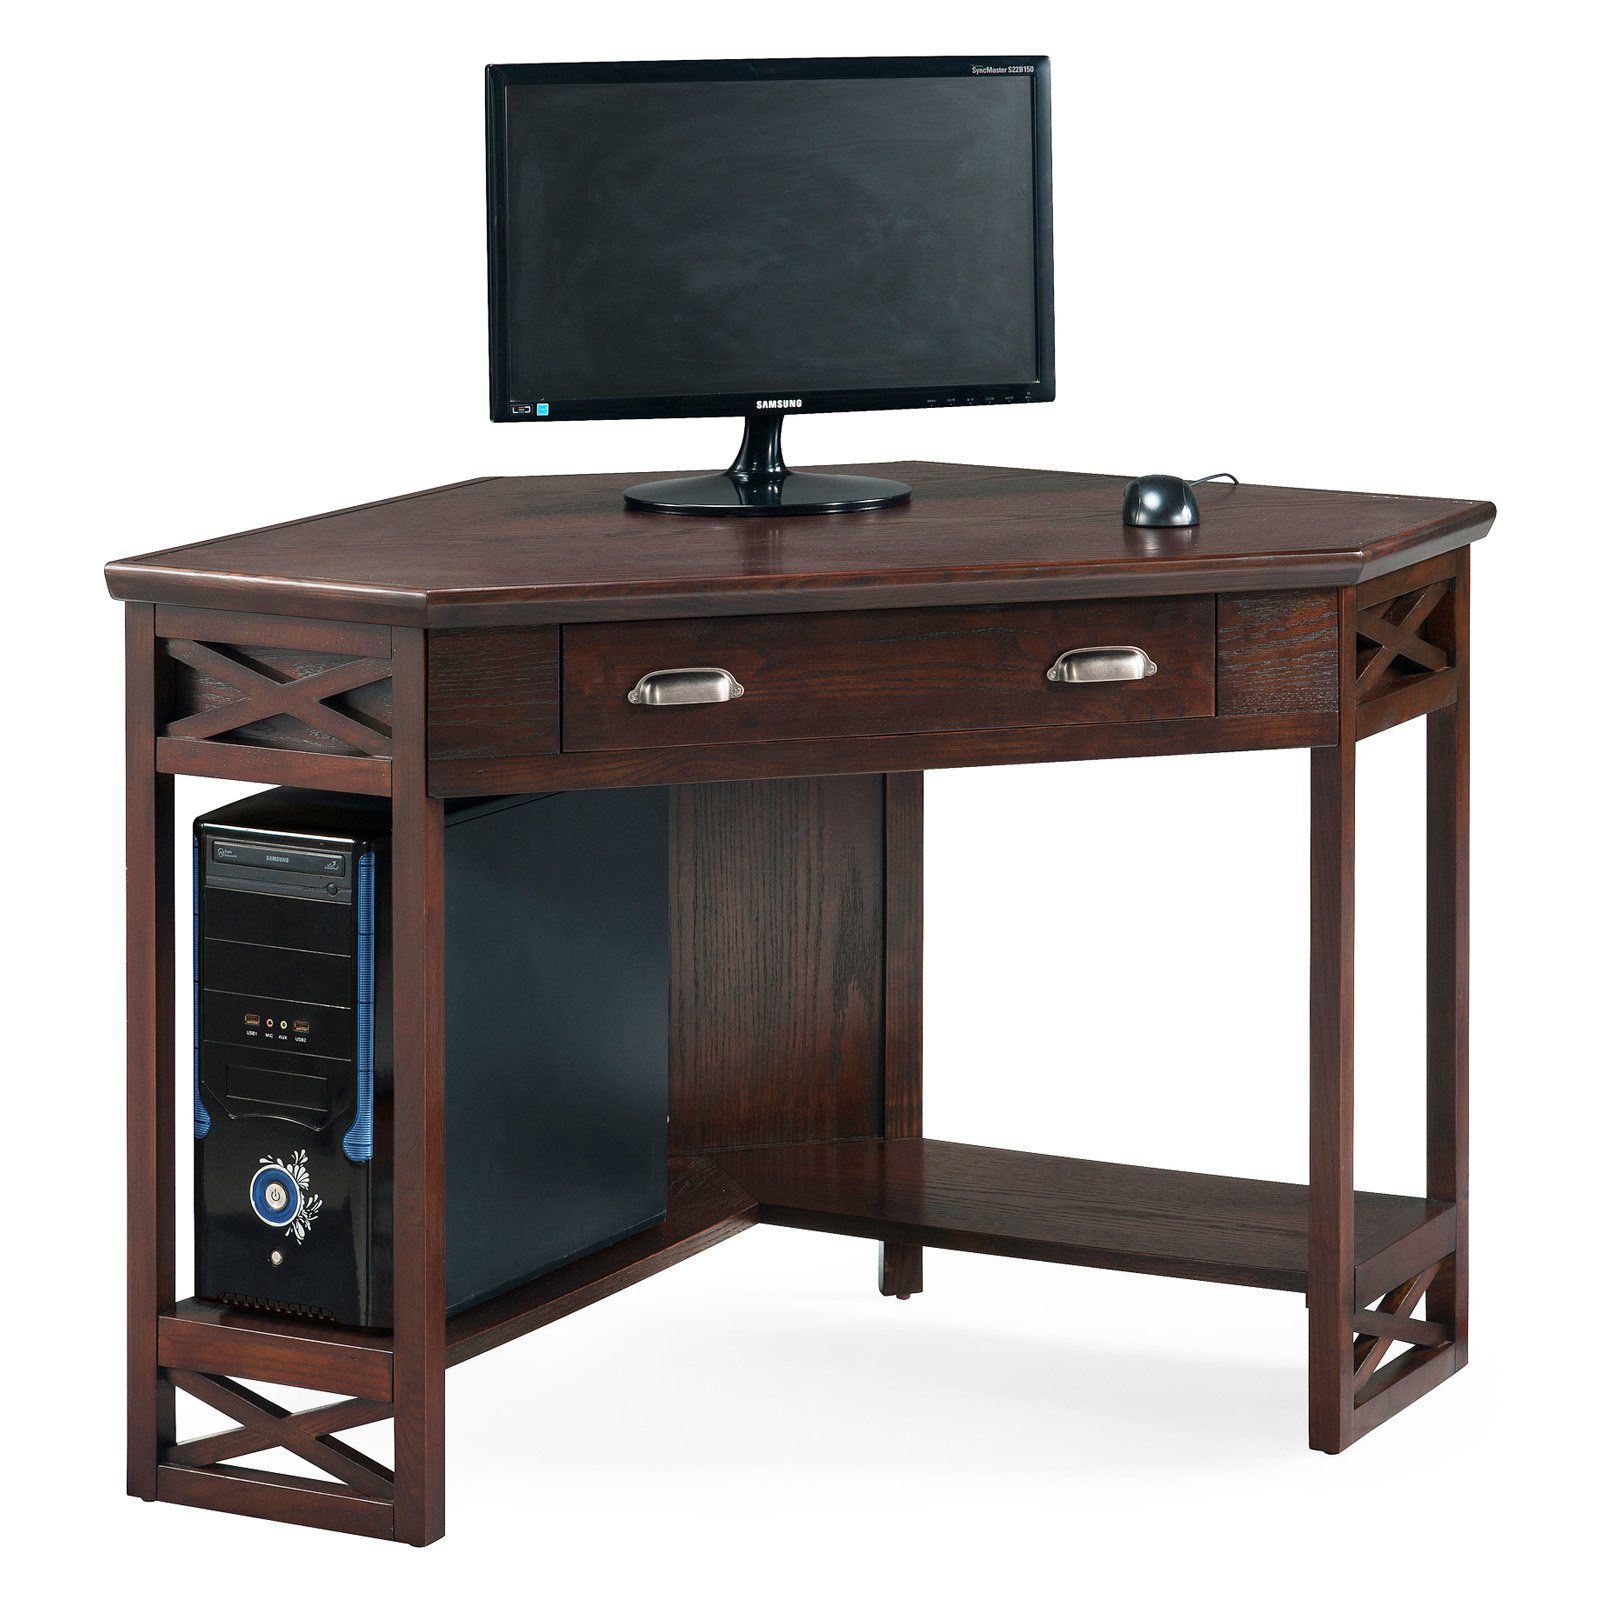 BRAND NEW Leick Home 48 in. Corner Computer/Writing Desk - Chocolate Oak. 50% DISCOUNTED